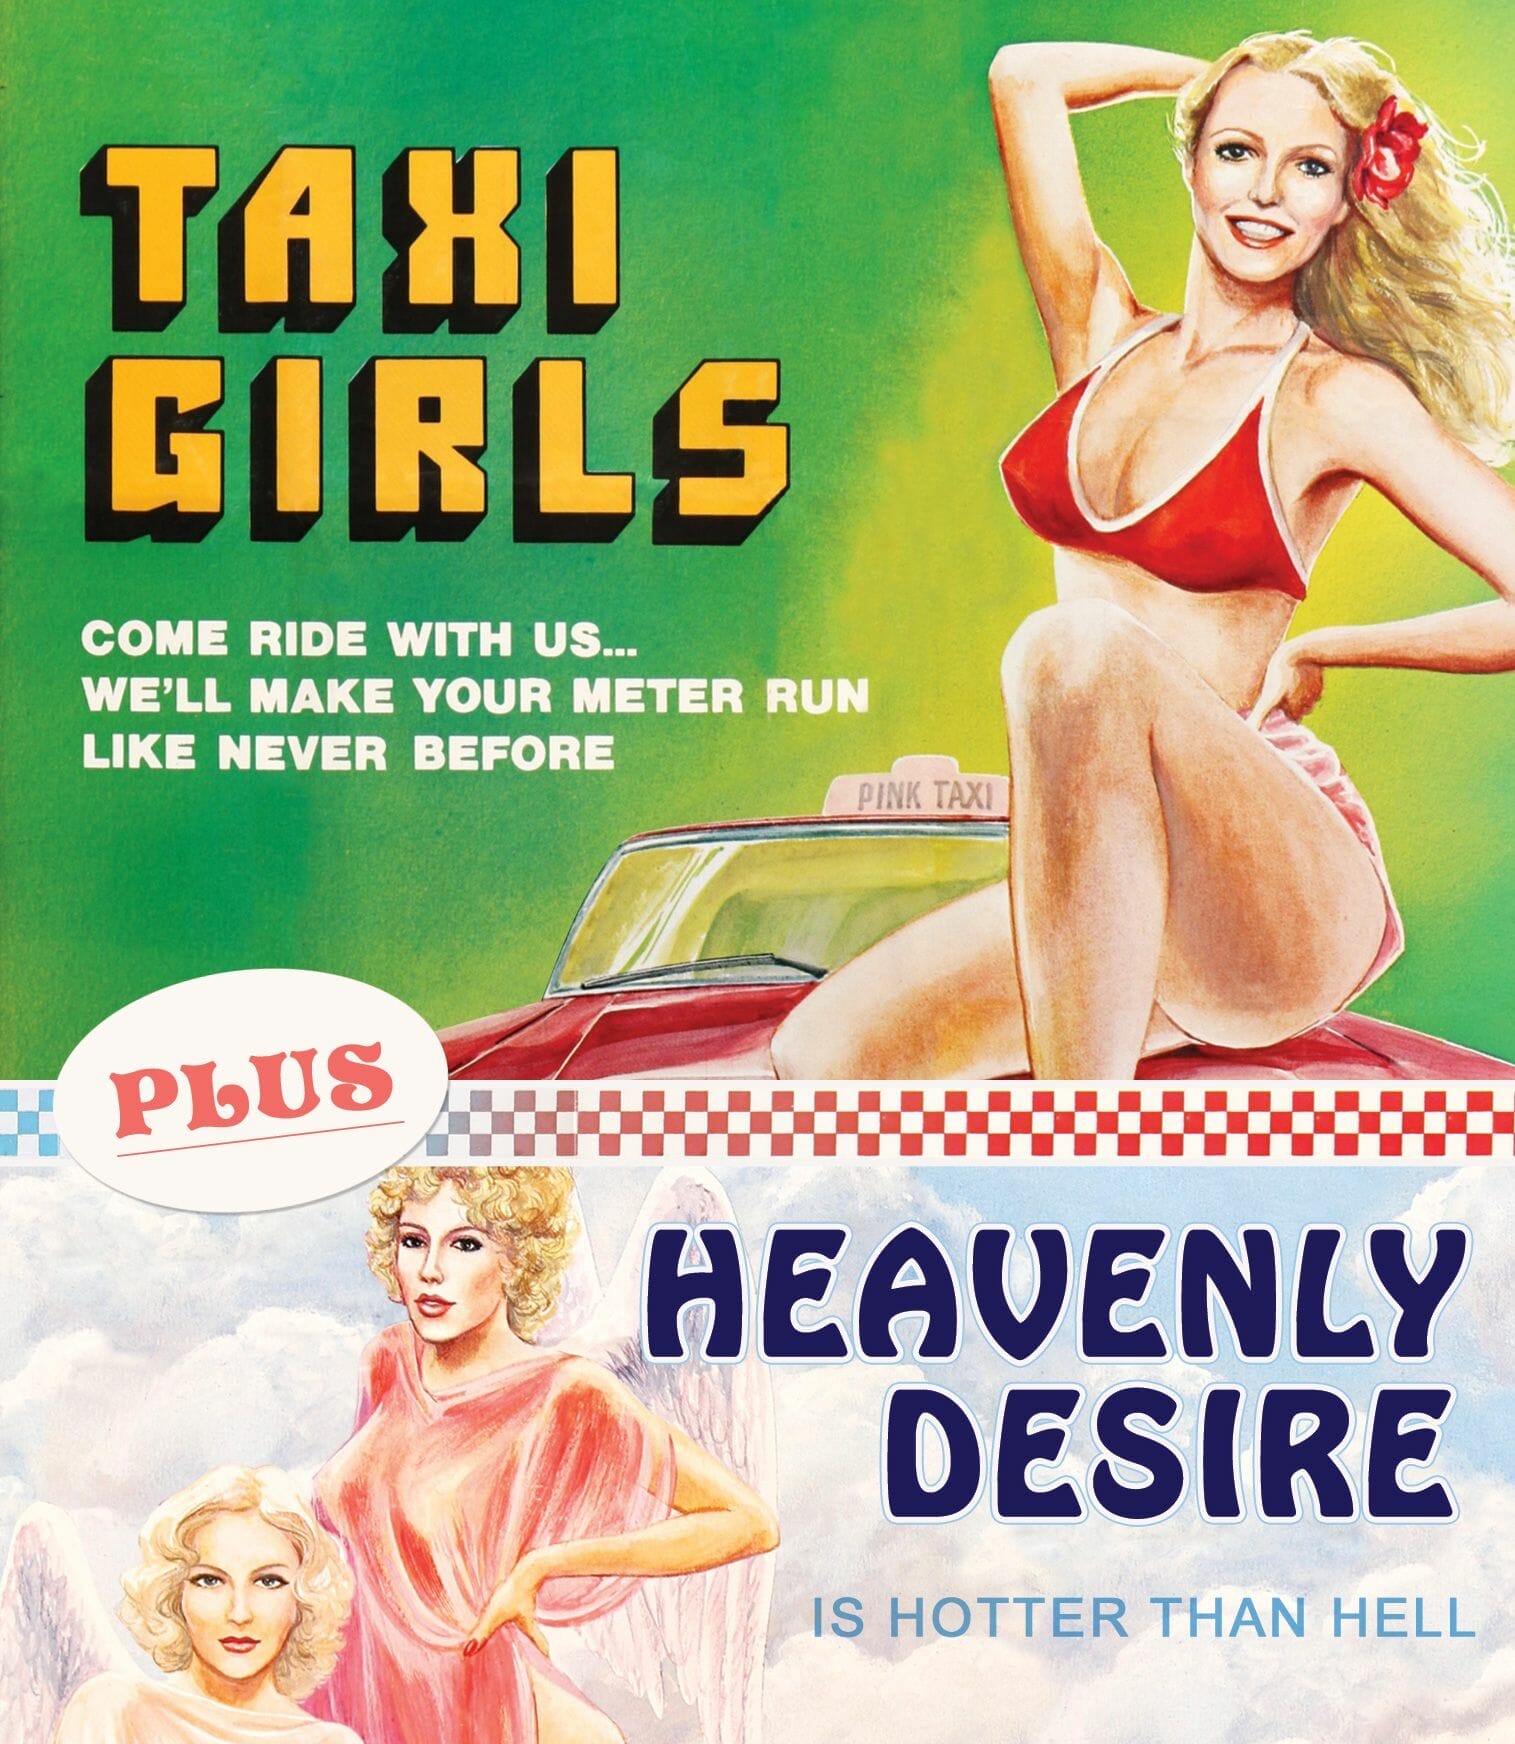 Taxi Girls / Heavenly Desire (Standard Edition Vinegar Syndrome) (Blu-Ray  All Region)